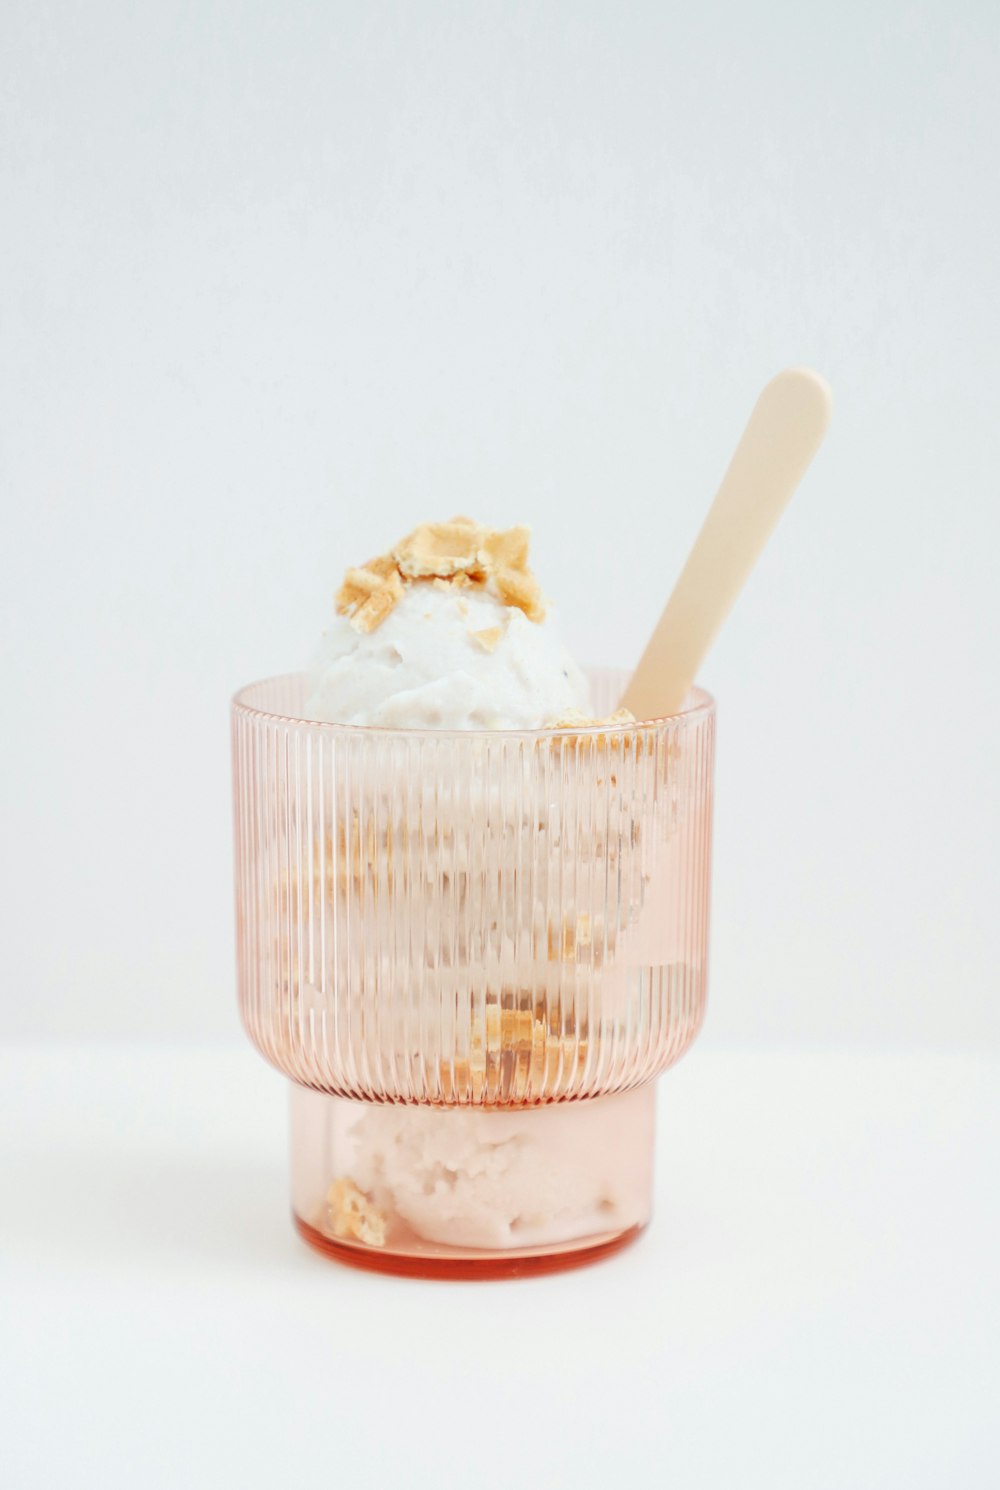 ice cream in cone with white ice cream on top